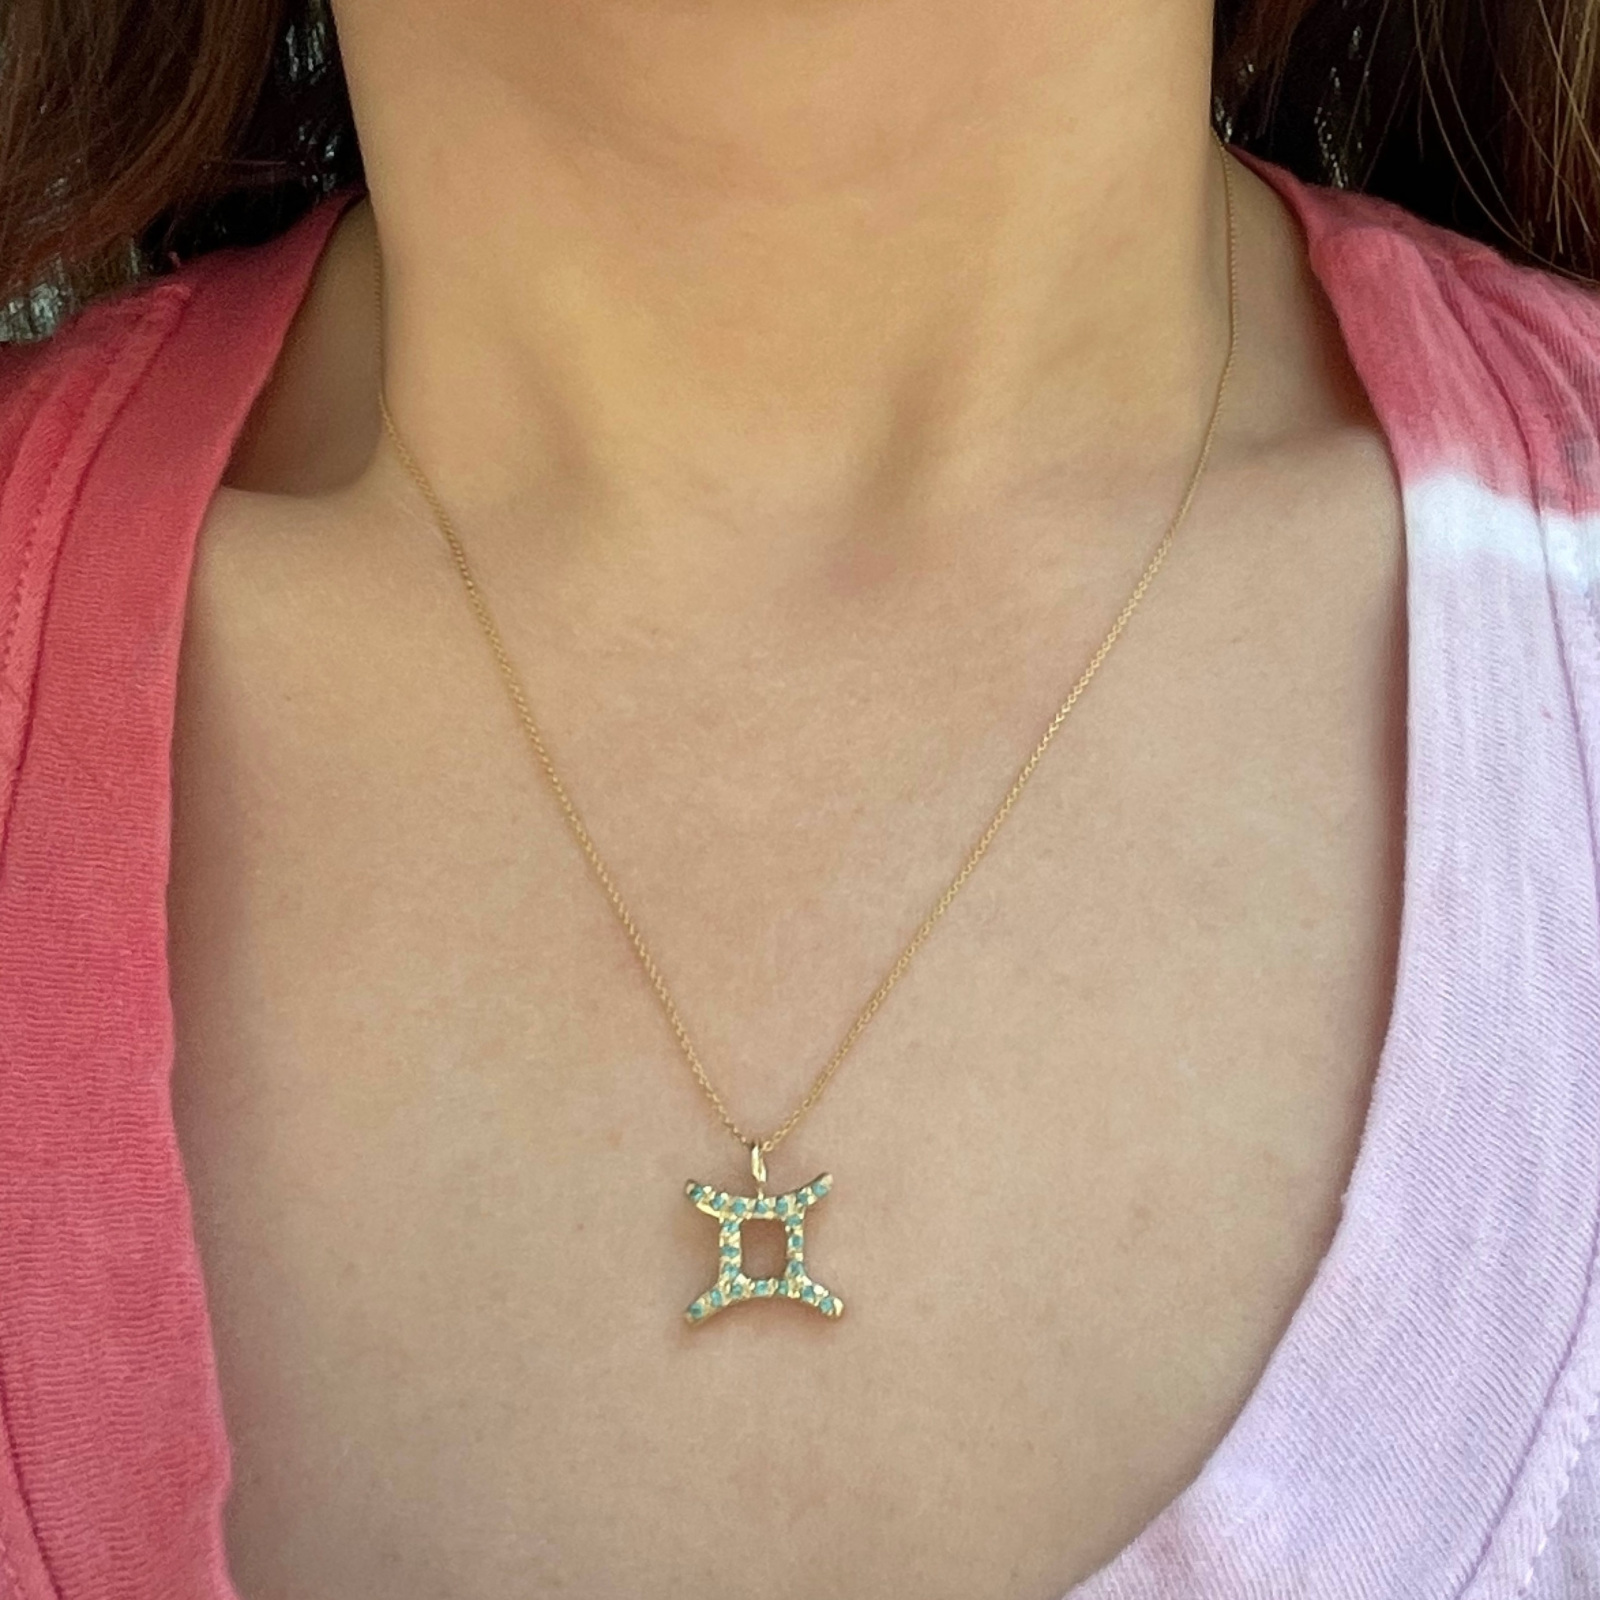 Gemini zodiac sign charm pendant necklace